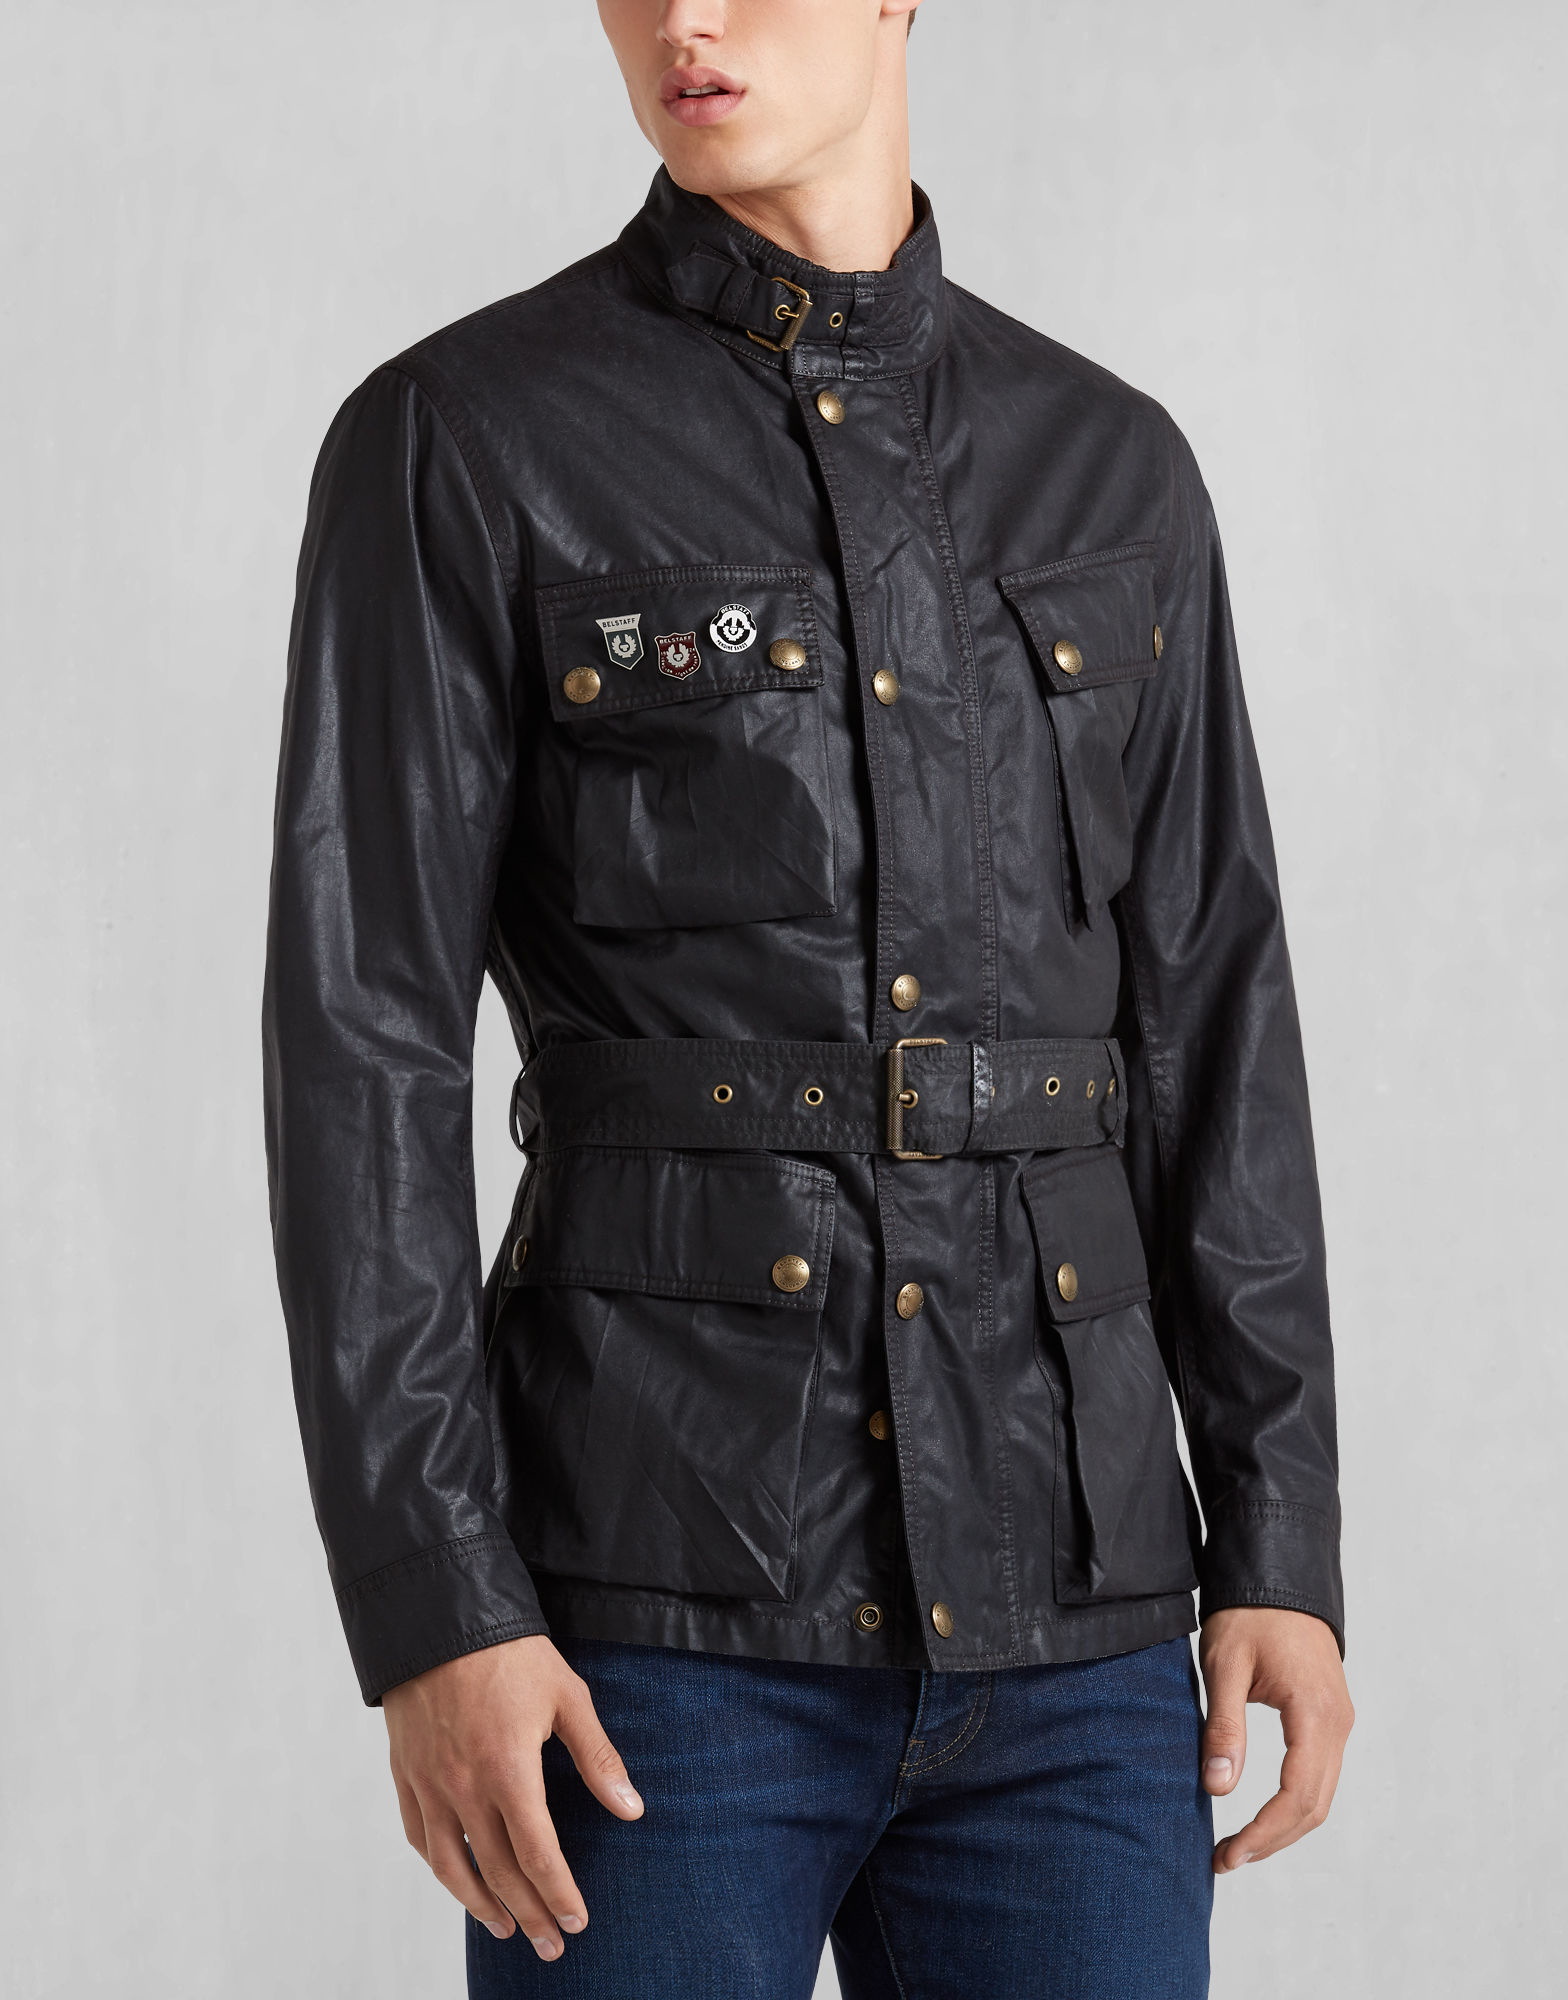 Belstaff Leather Trialmaster Ps Jacket in Black for Men - Lyst